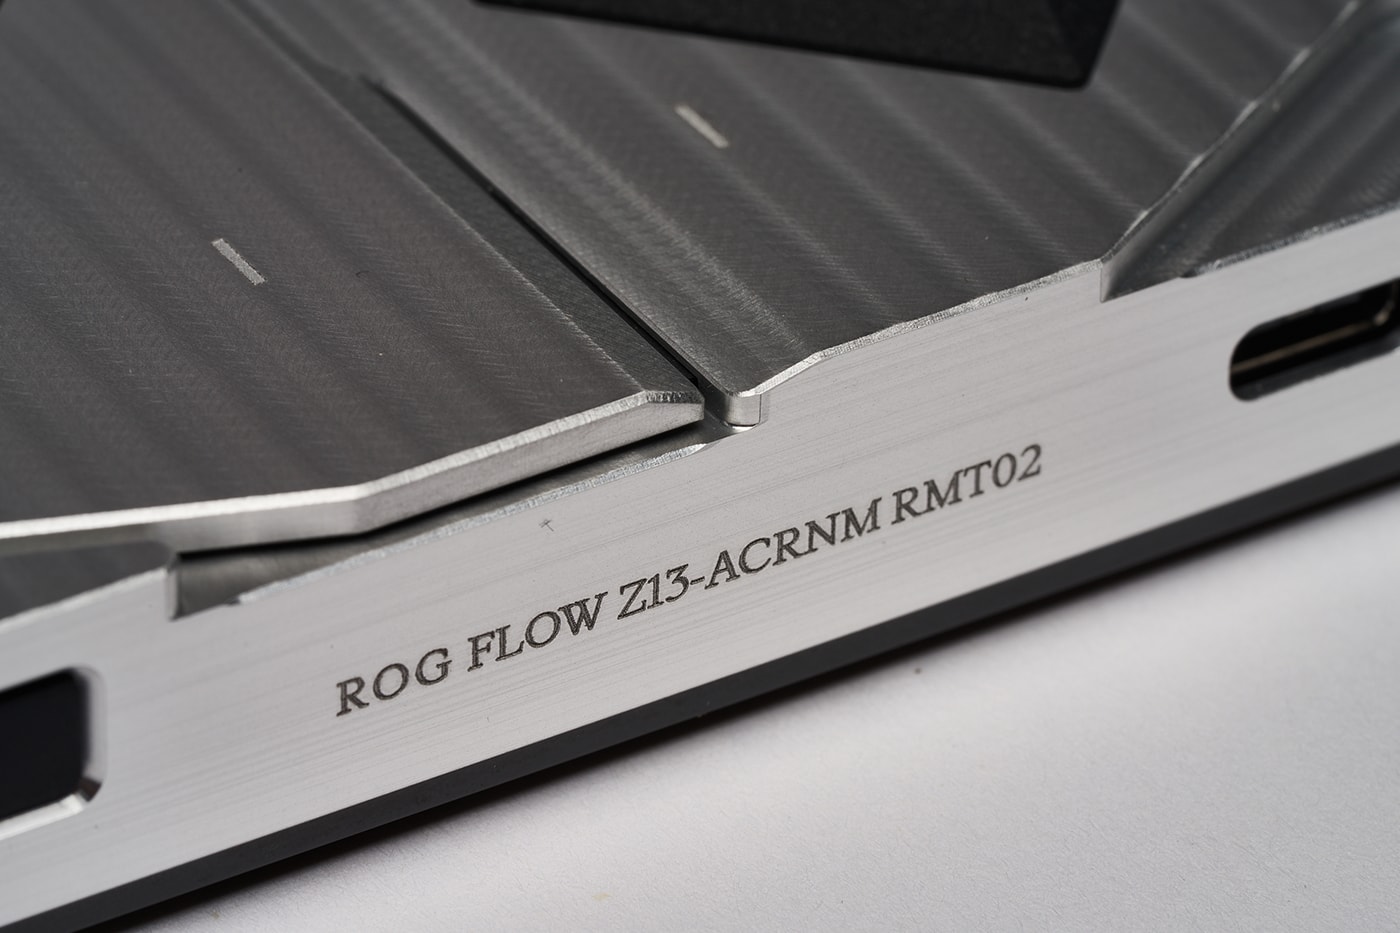 ACRONYM 攜手 ASUS 推出全新聯名筆記型電腦「ROG Flow Z13-ACRNM RMT02」